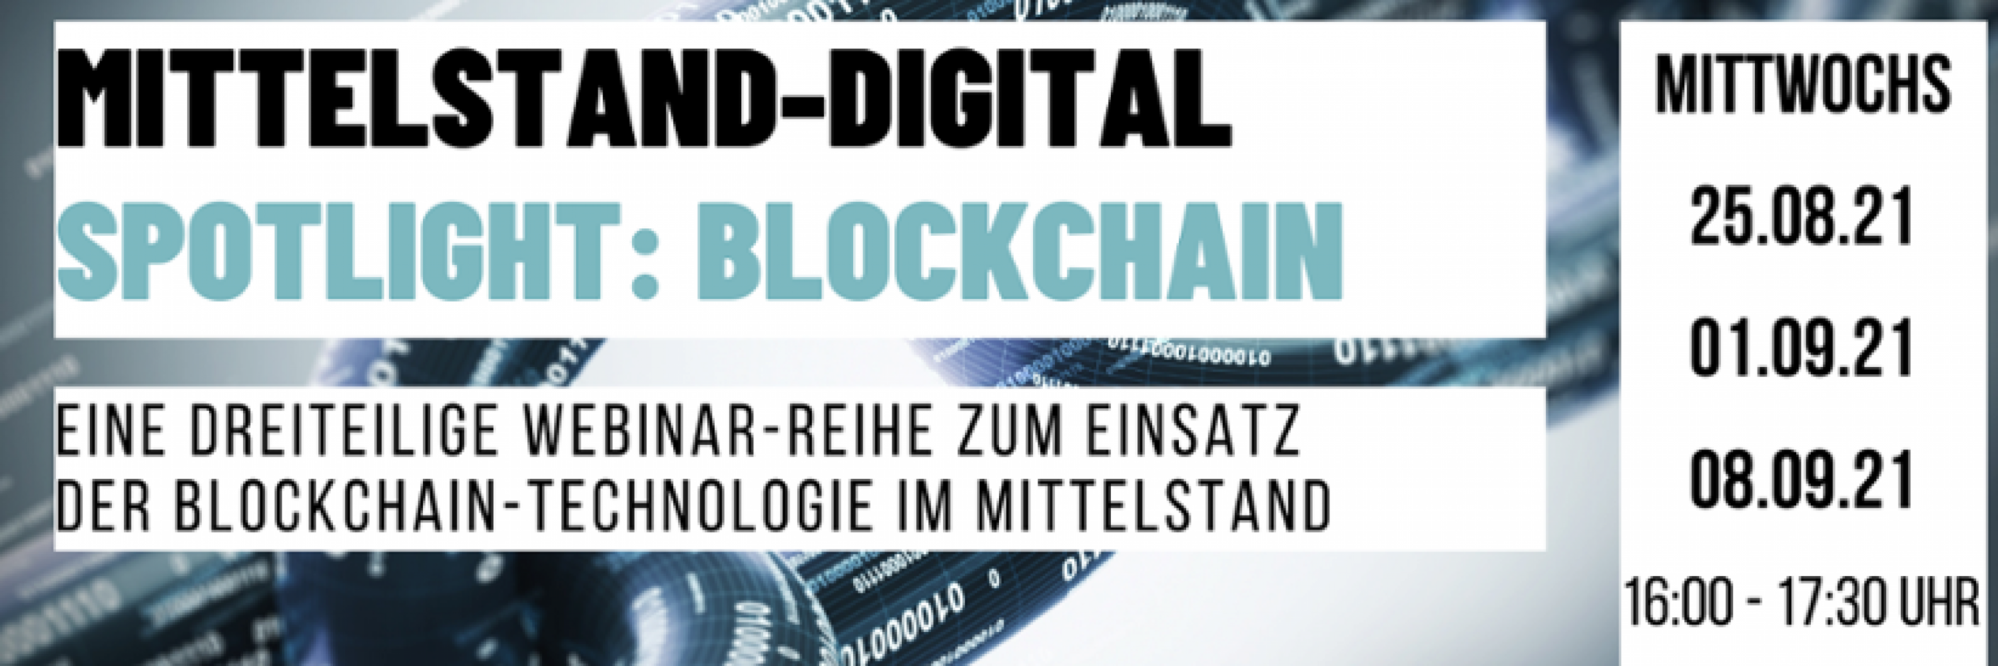 Online Webinar-Reihe: Mittelstand-Digital Spotlight: Blockchain